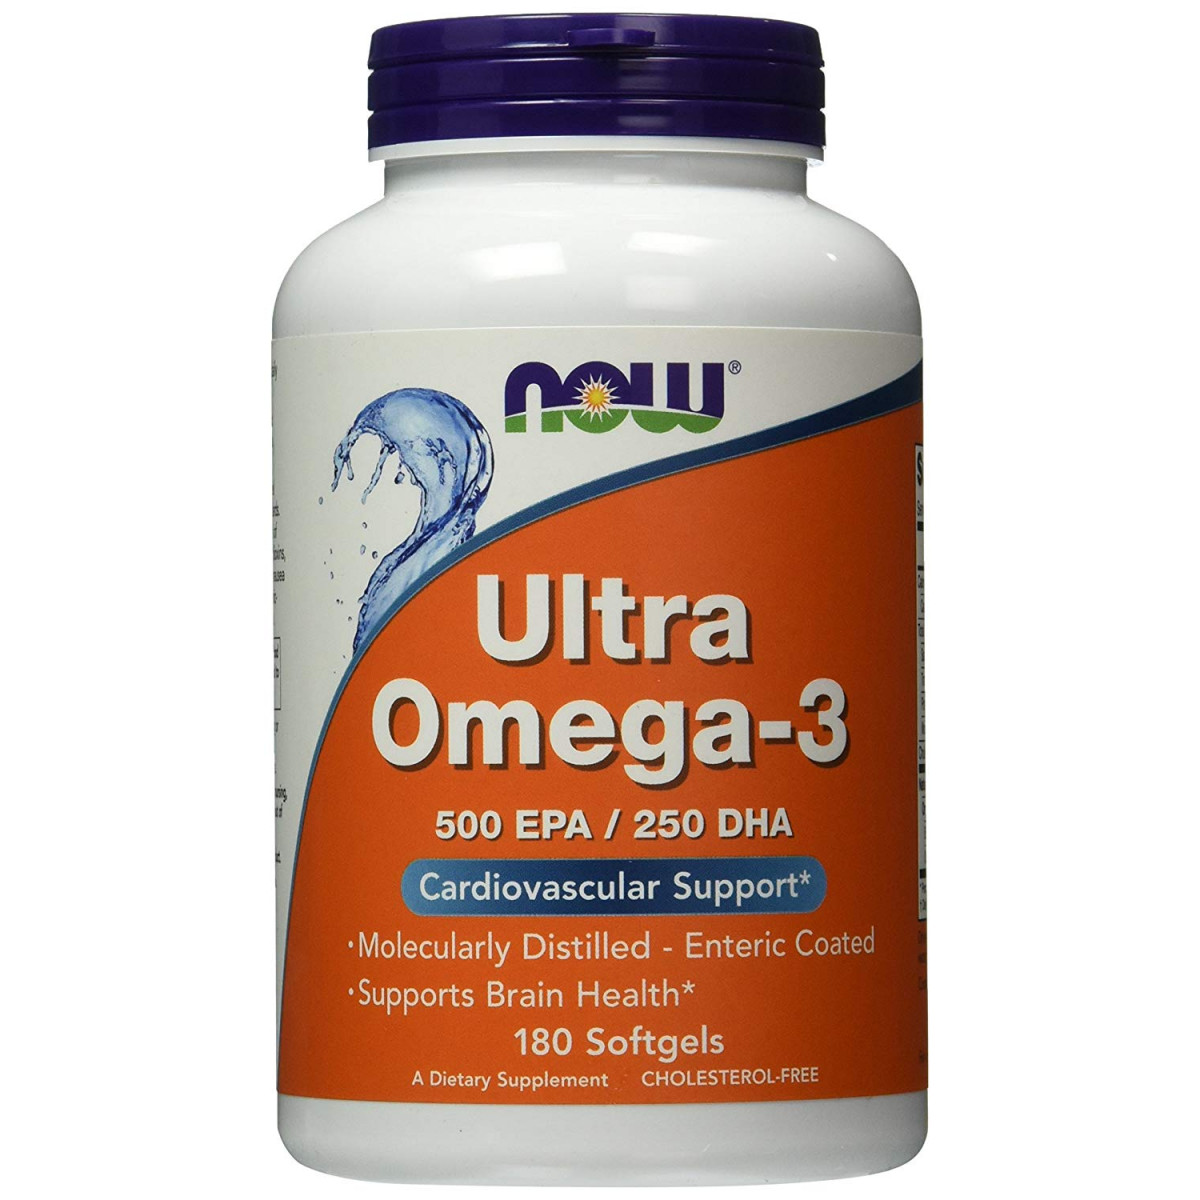 NOW Ultra Omega 3 Fish Oil,180 Softgels